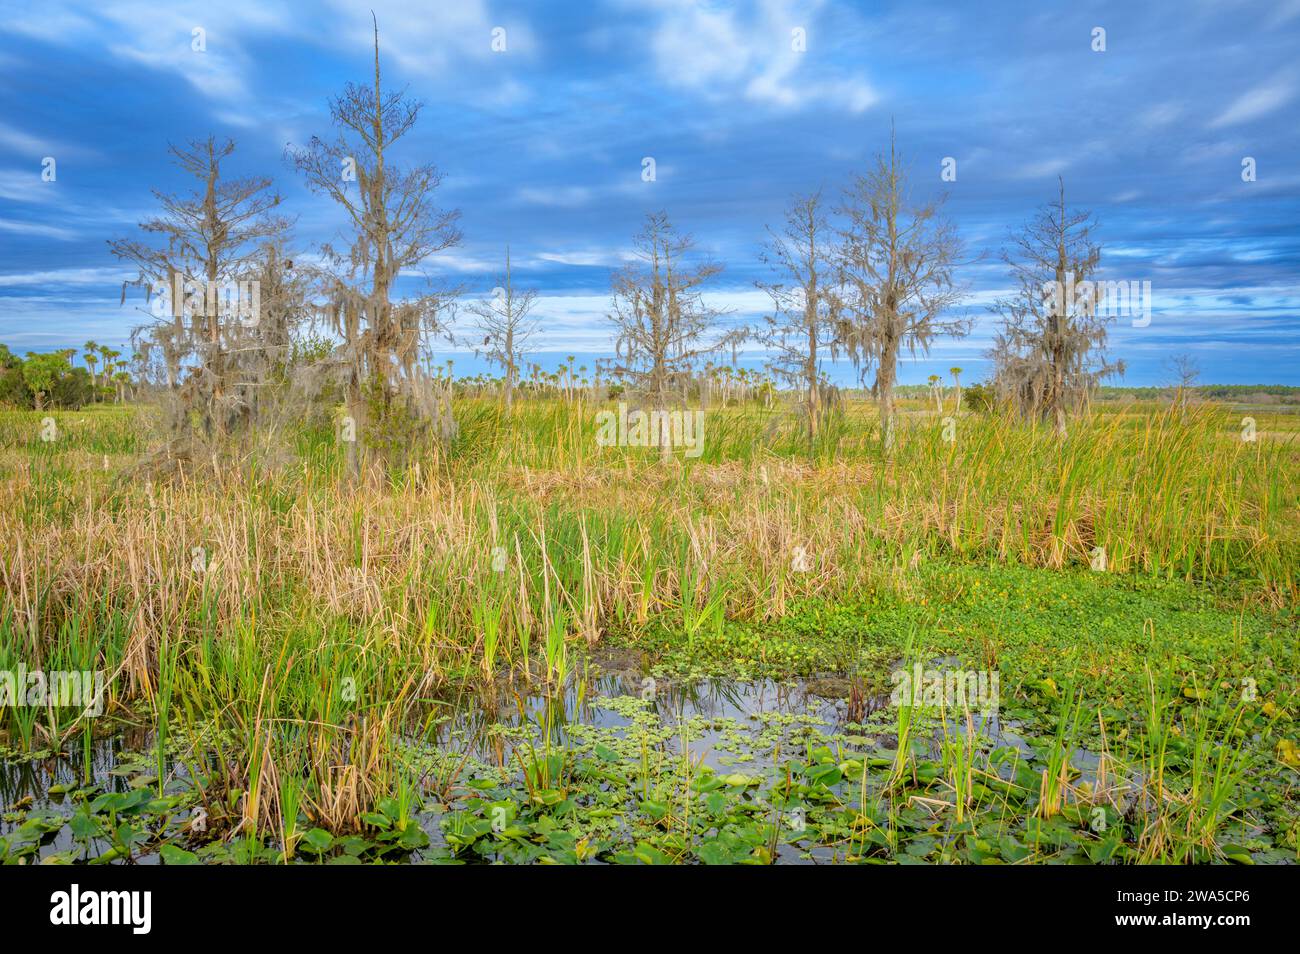 Typical wetland landscape, Florida, USA. Stock Photo